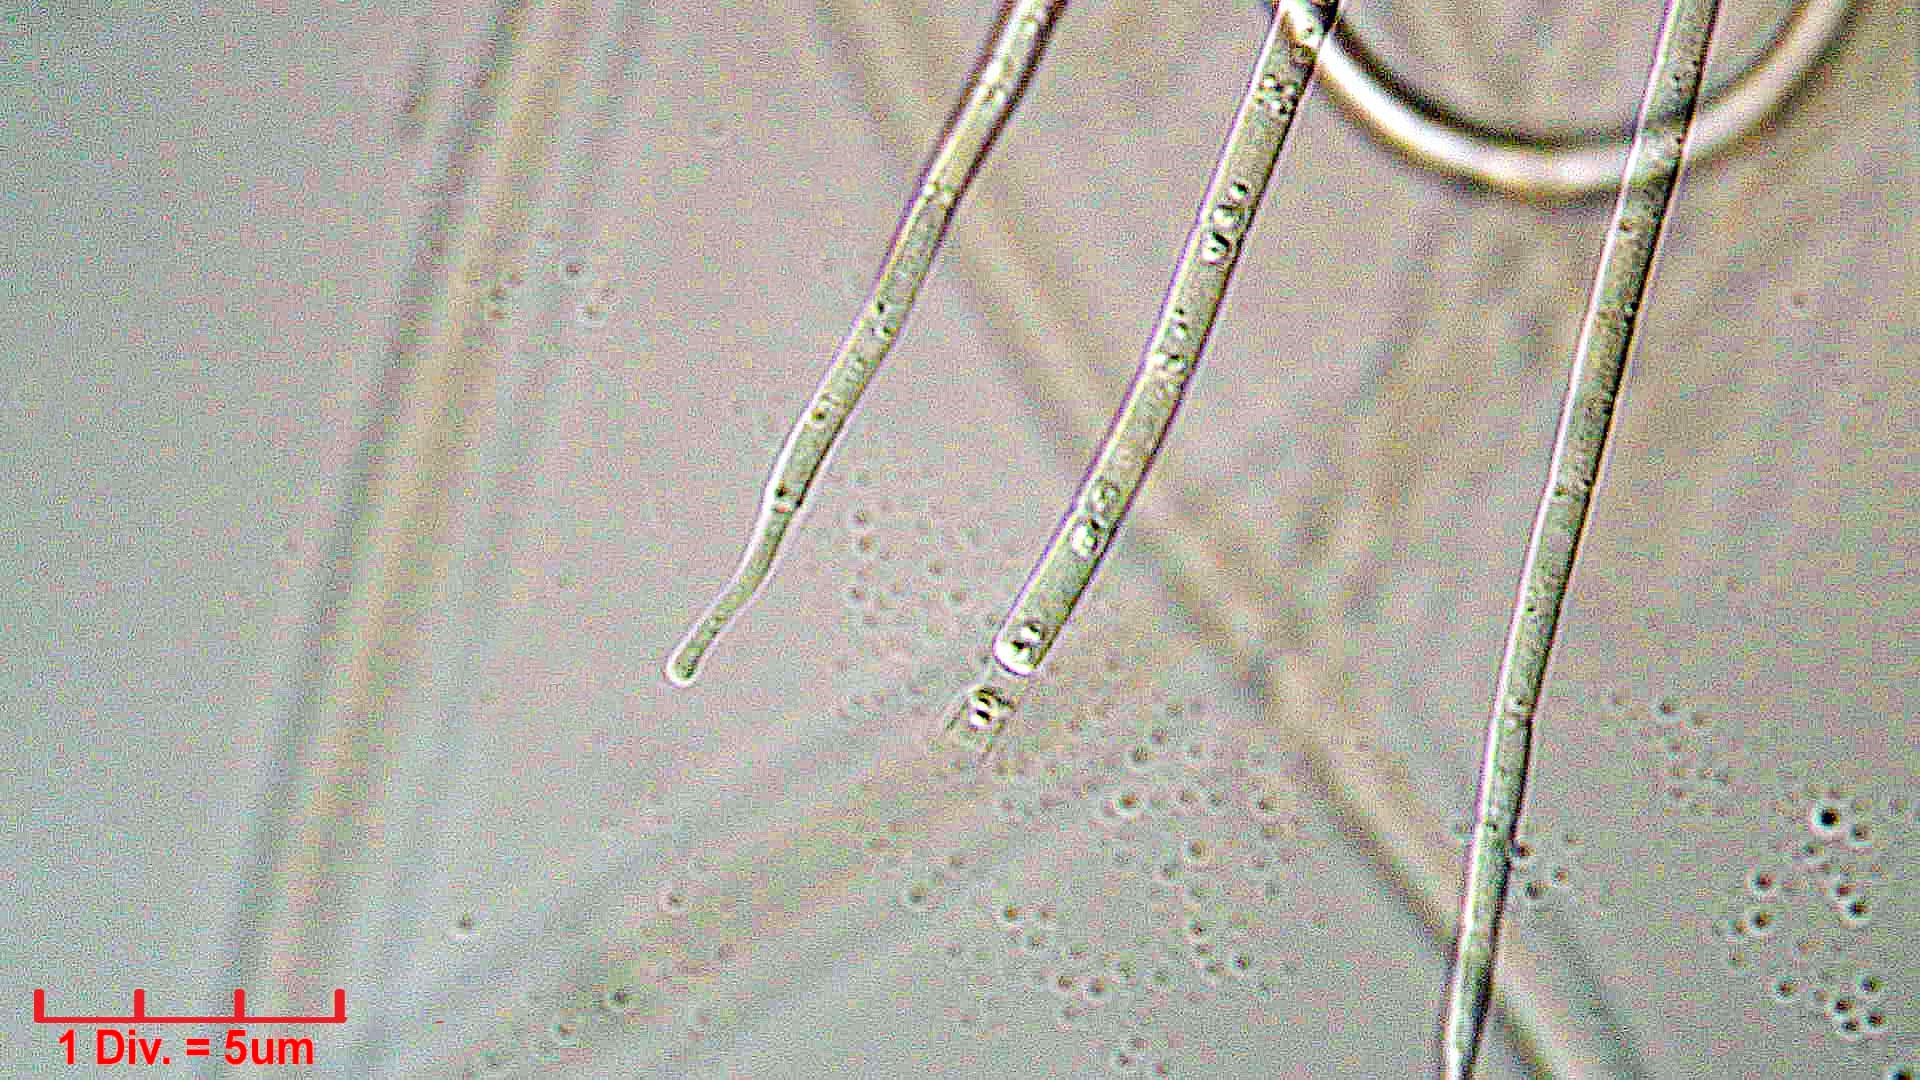 ././Cyanobacteria/Oscillatoriales/Coleofasciculaceae/Geitlerinema/splendidum/geitlerinema-splendidum-294.jpg